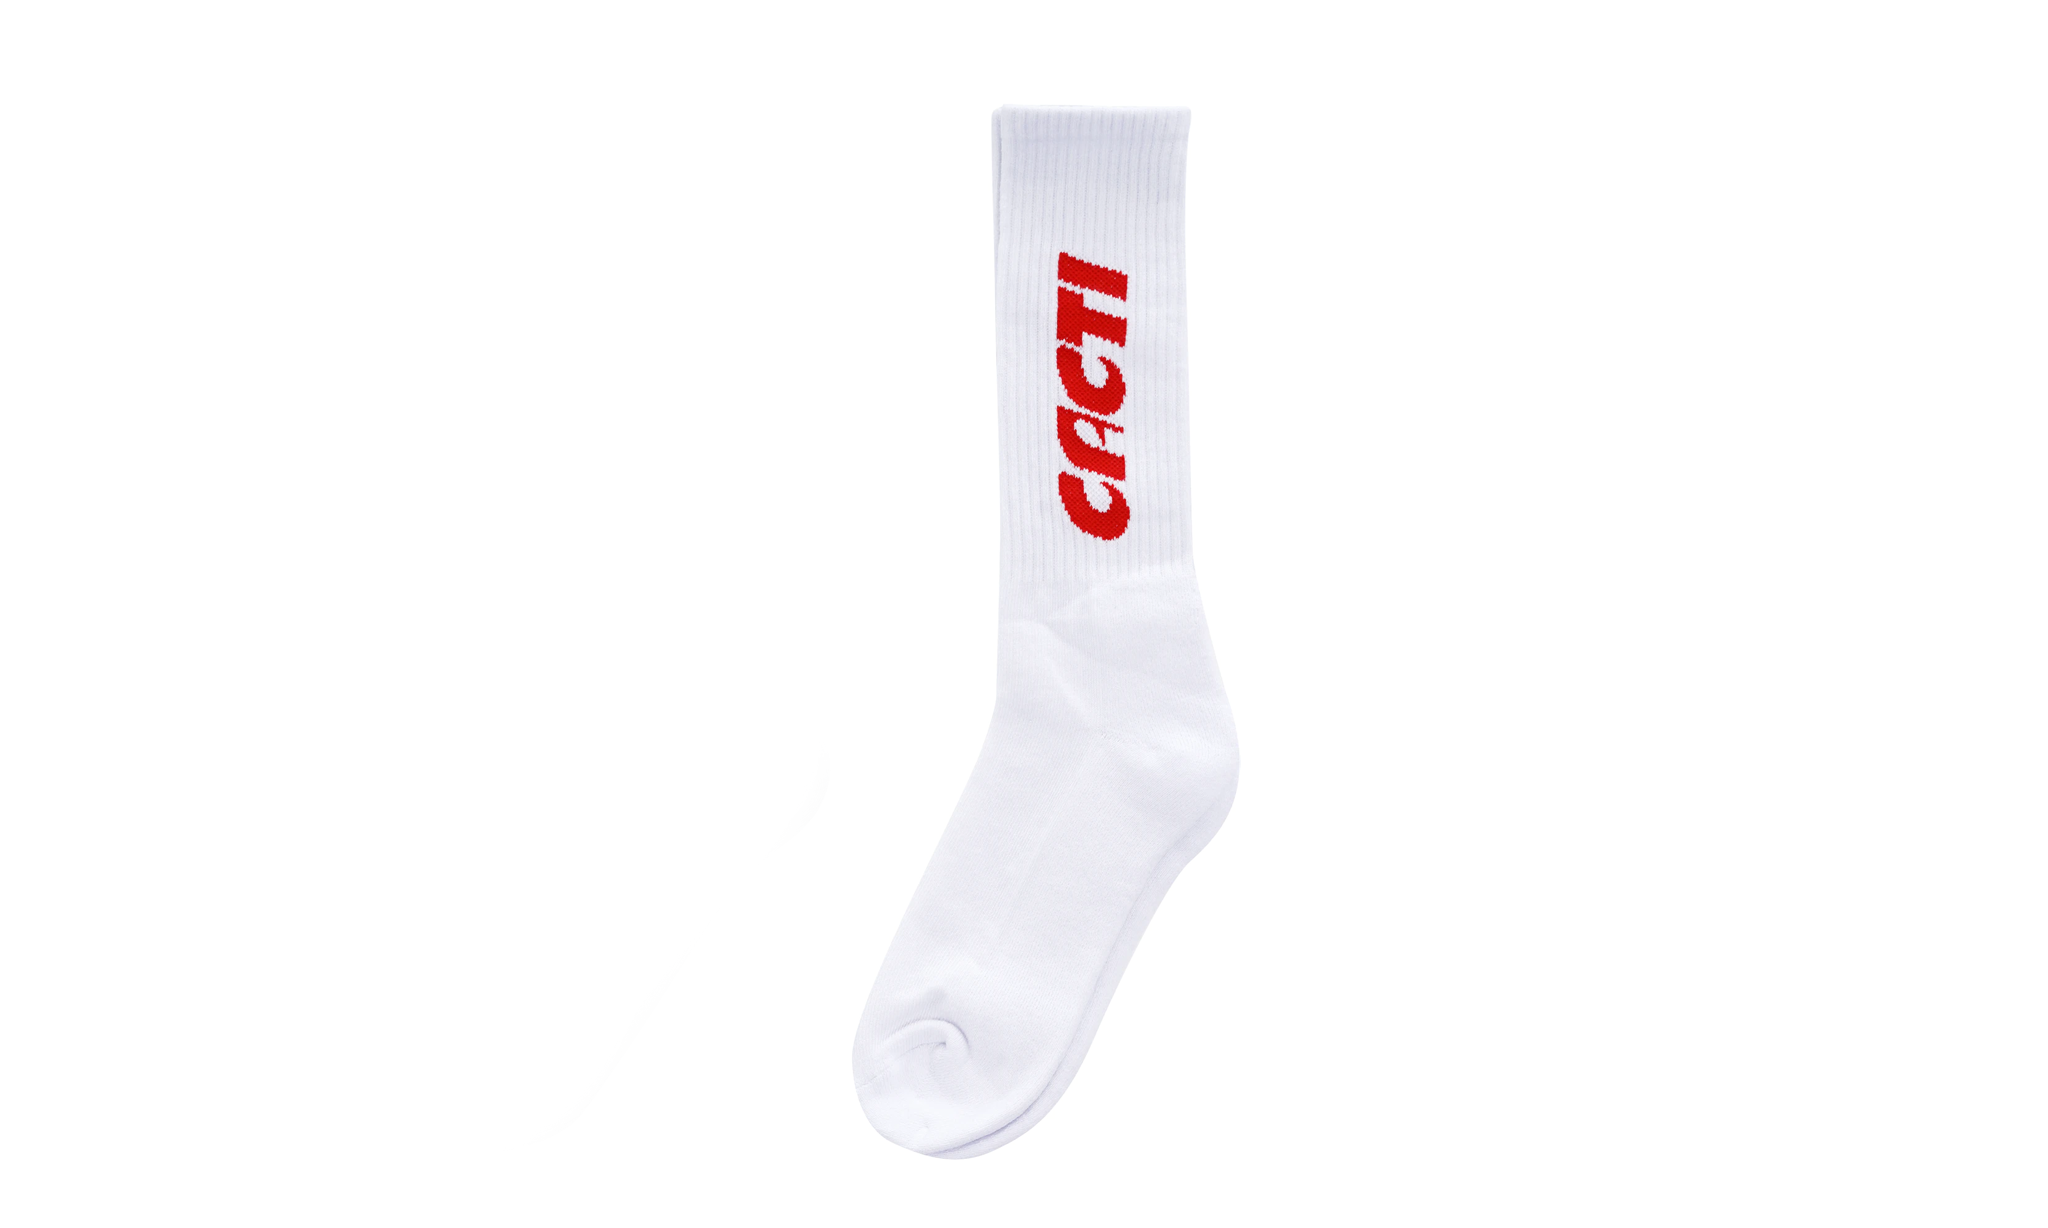 Travis scott astroworld cacti logo socks (white/red)